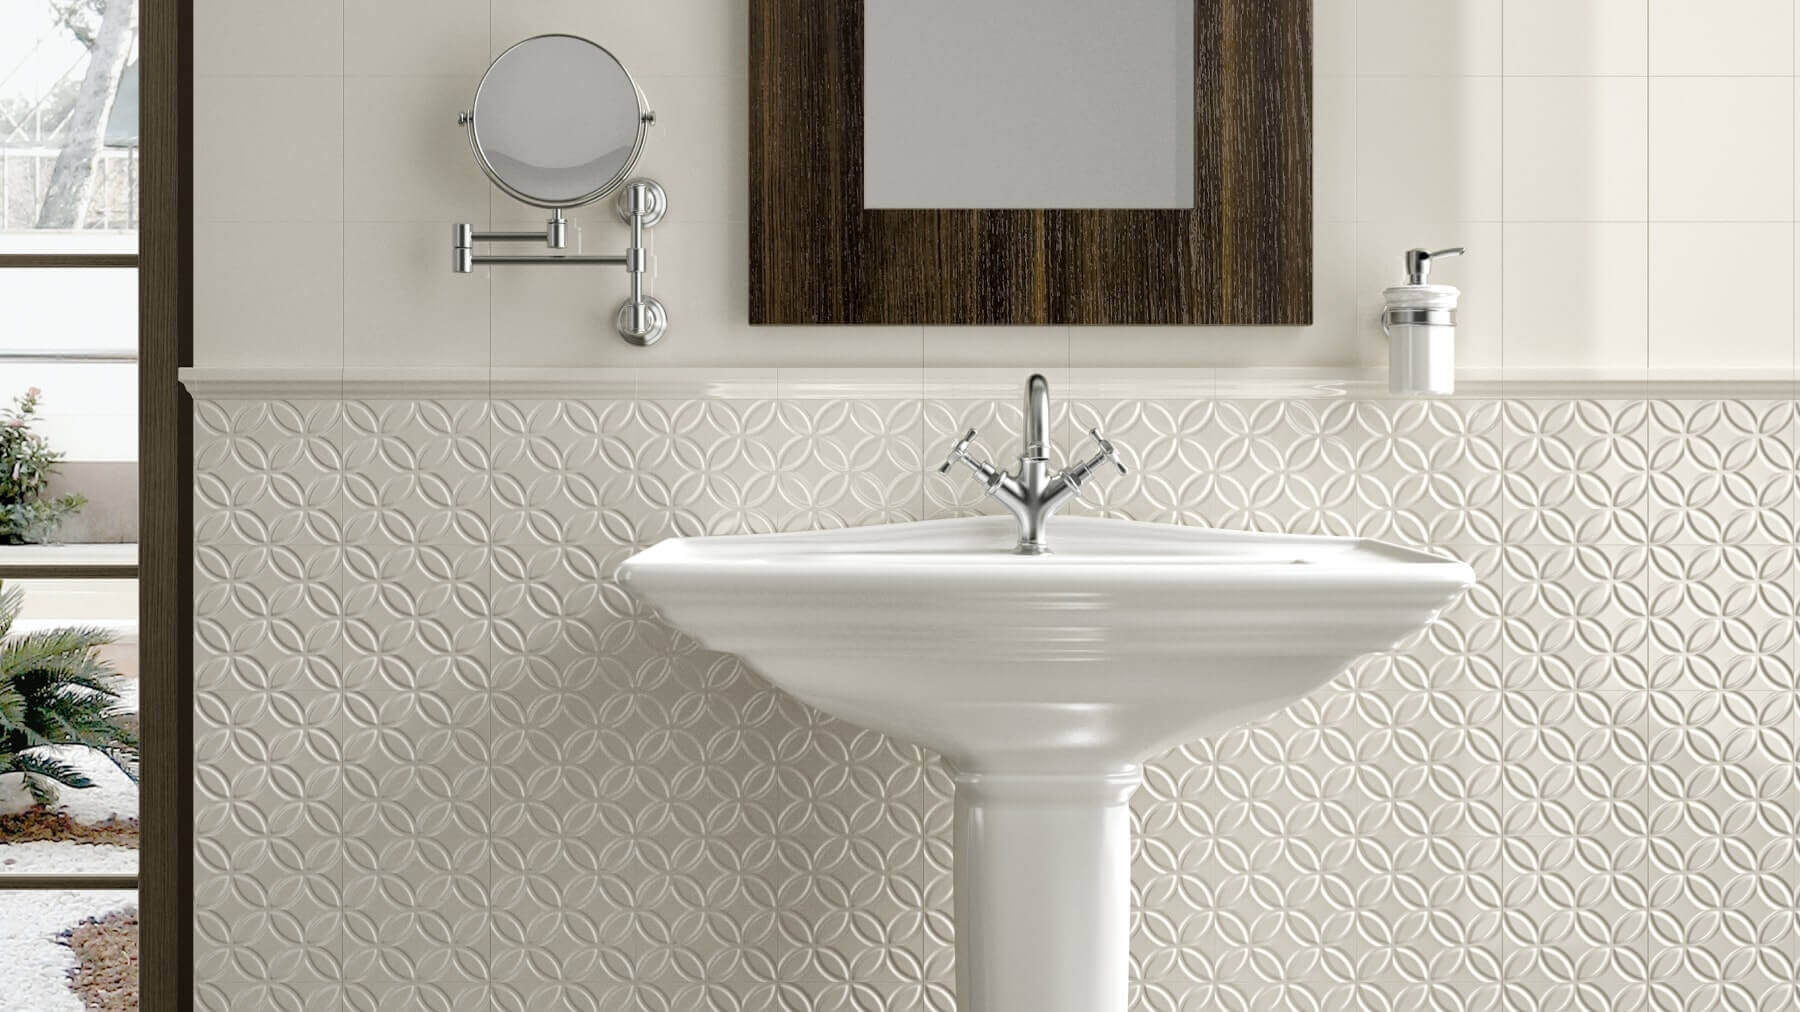 White geometric tiles create depth and texture.